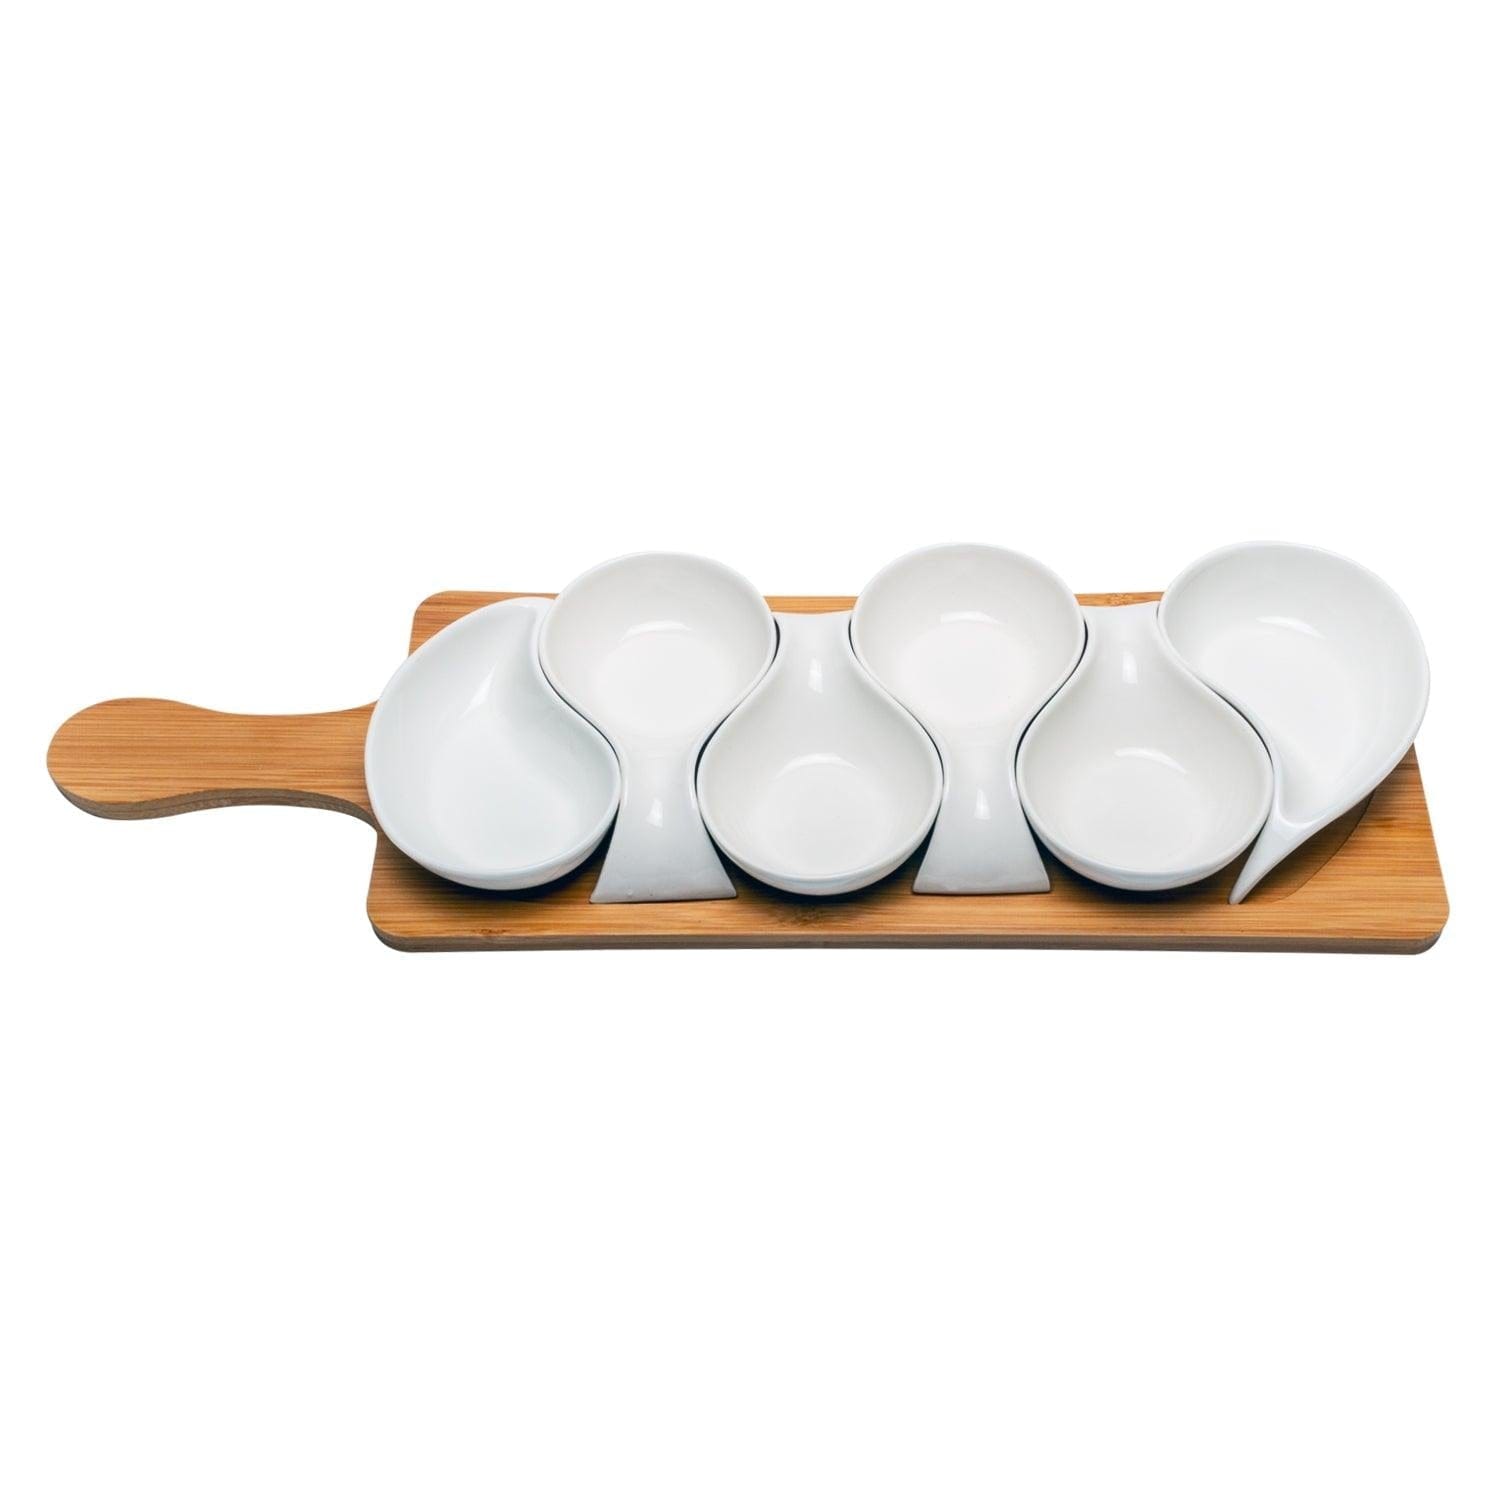 Splendor Serving Platter with 6 Stylish Serving Bowls on Wooden Tray Set